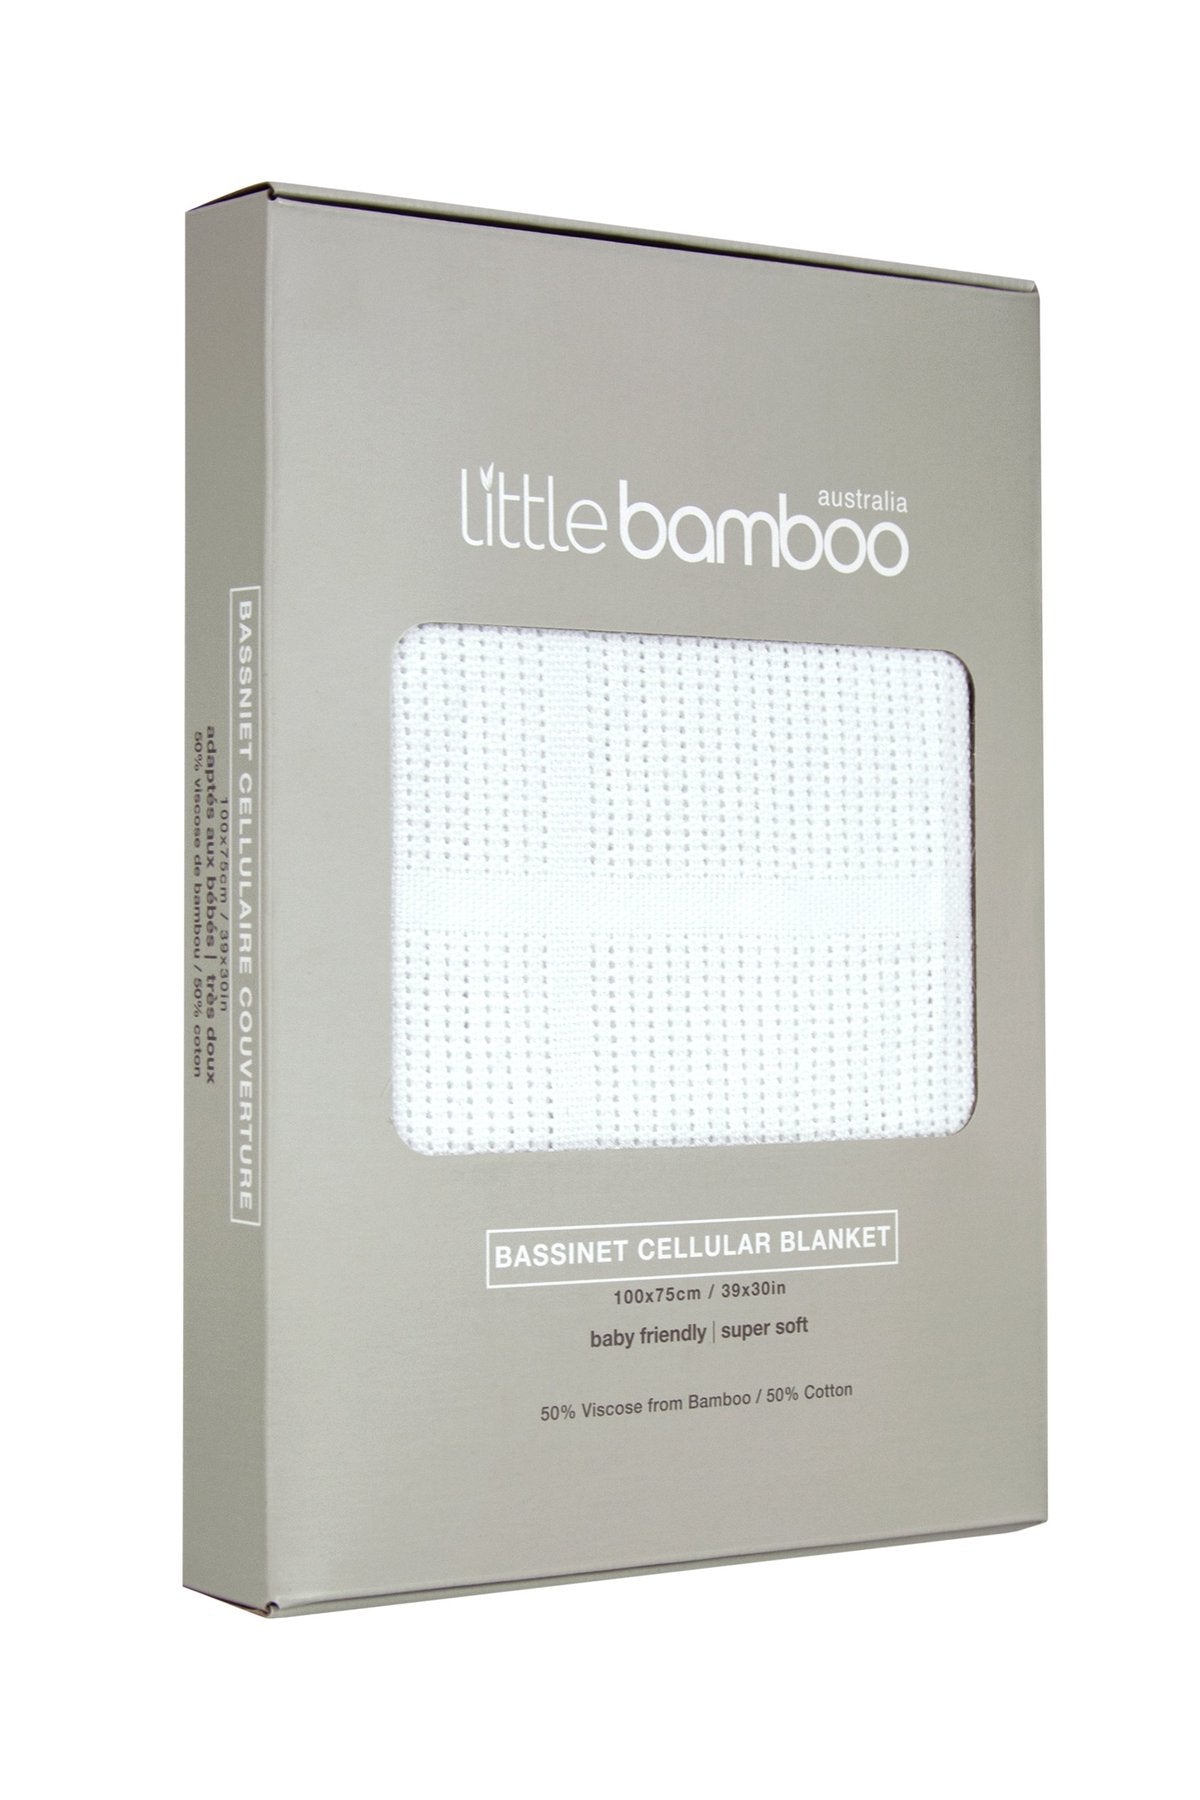 Little Bamboo Cot Cellular Blanket